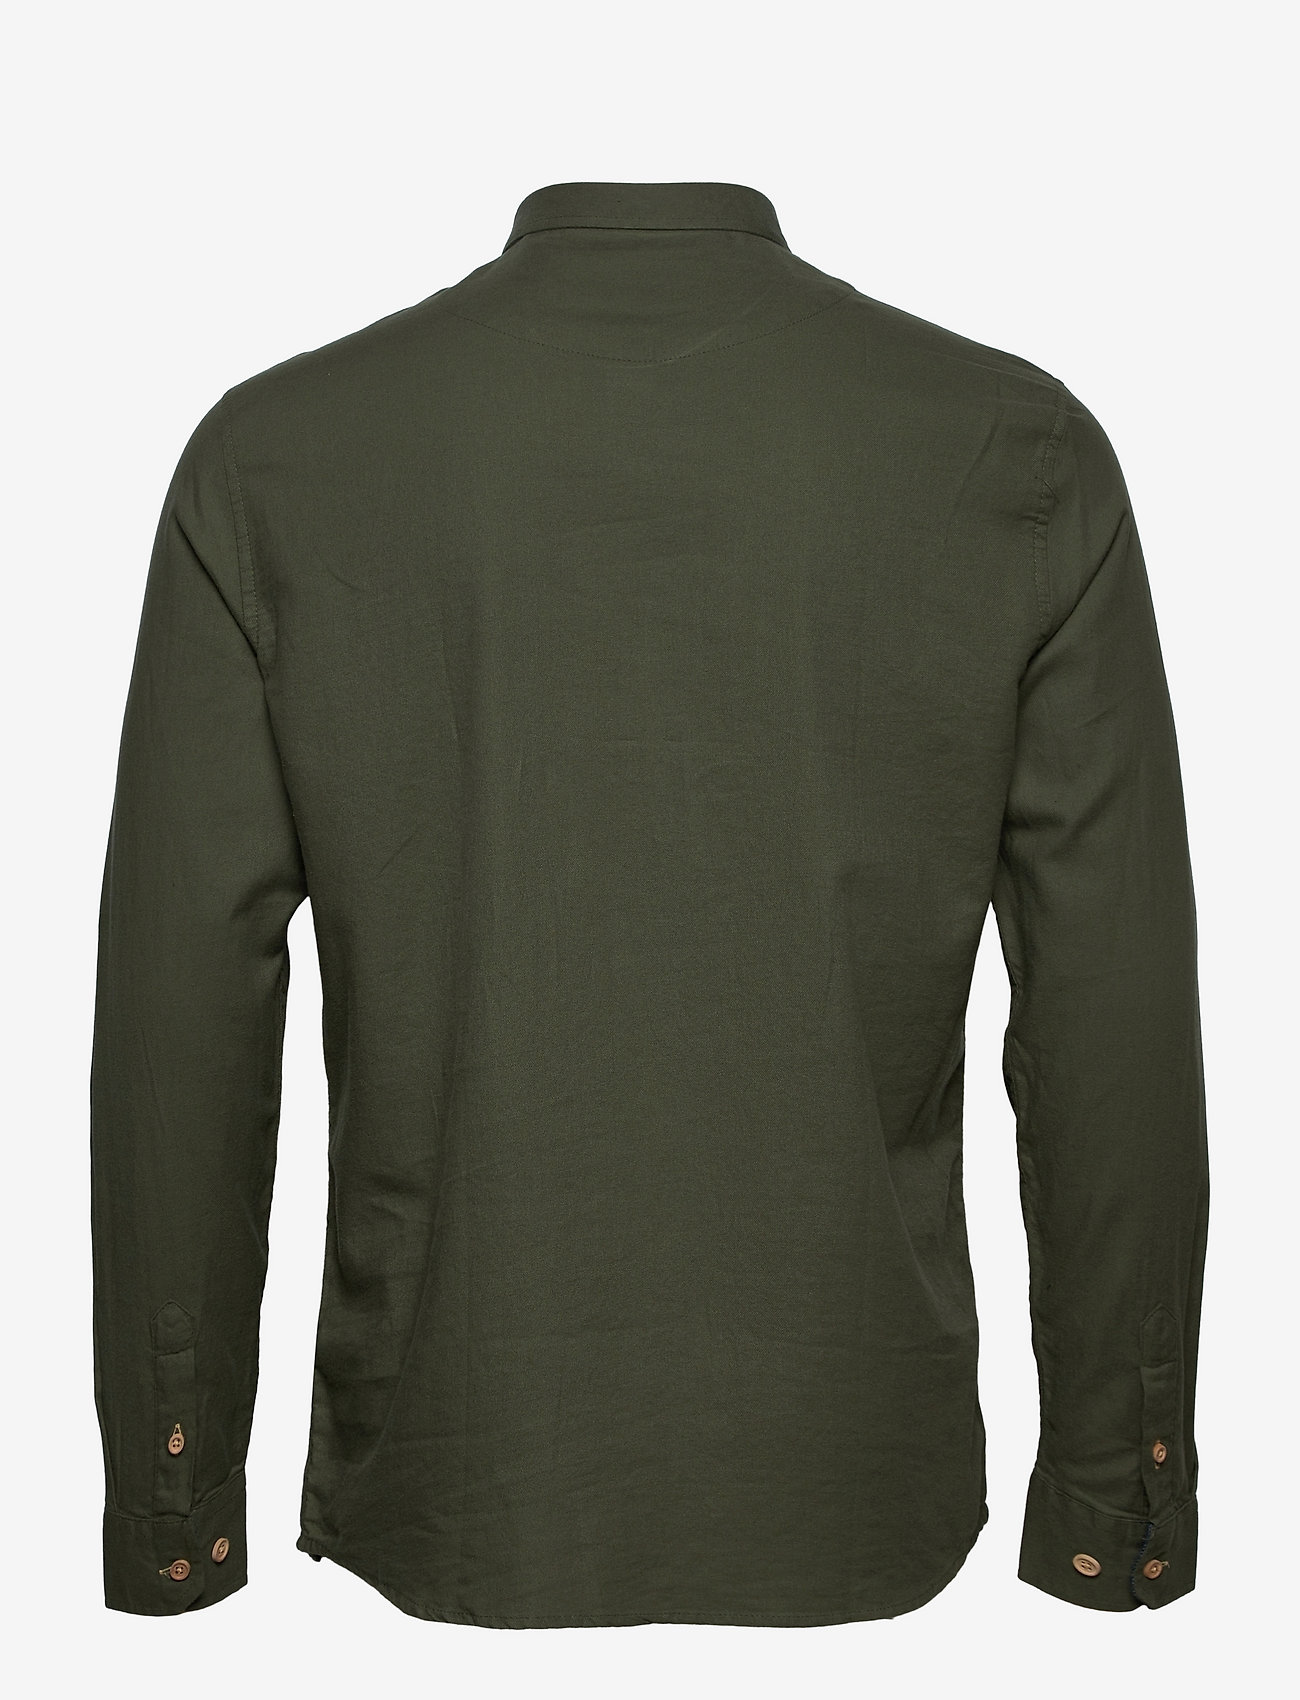 Kronstadt - Dean Diego Cotton shirt - basic shirts - army - 1